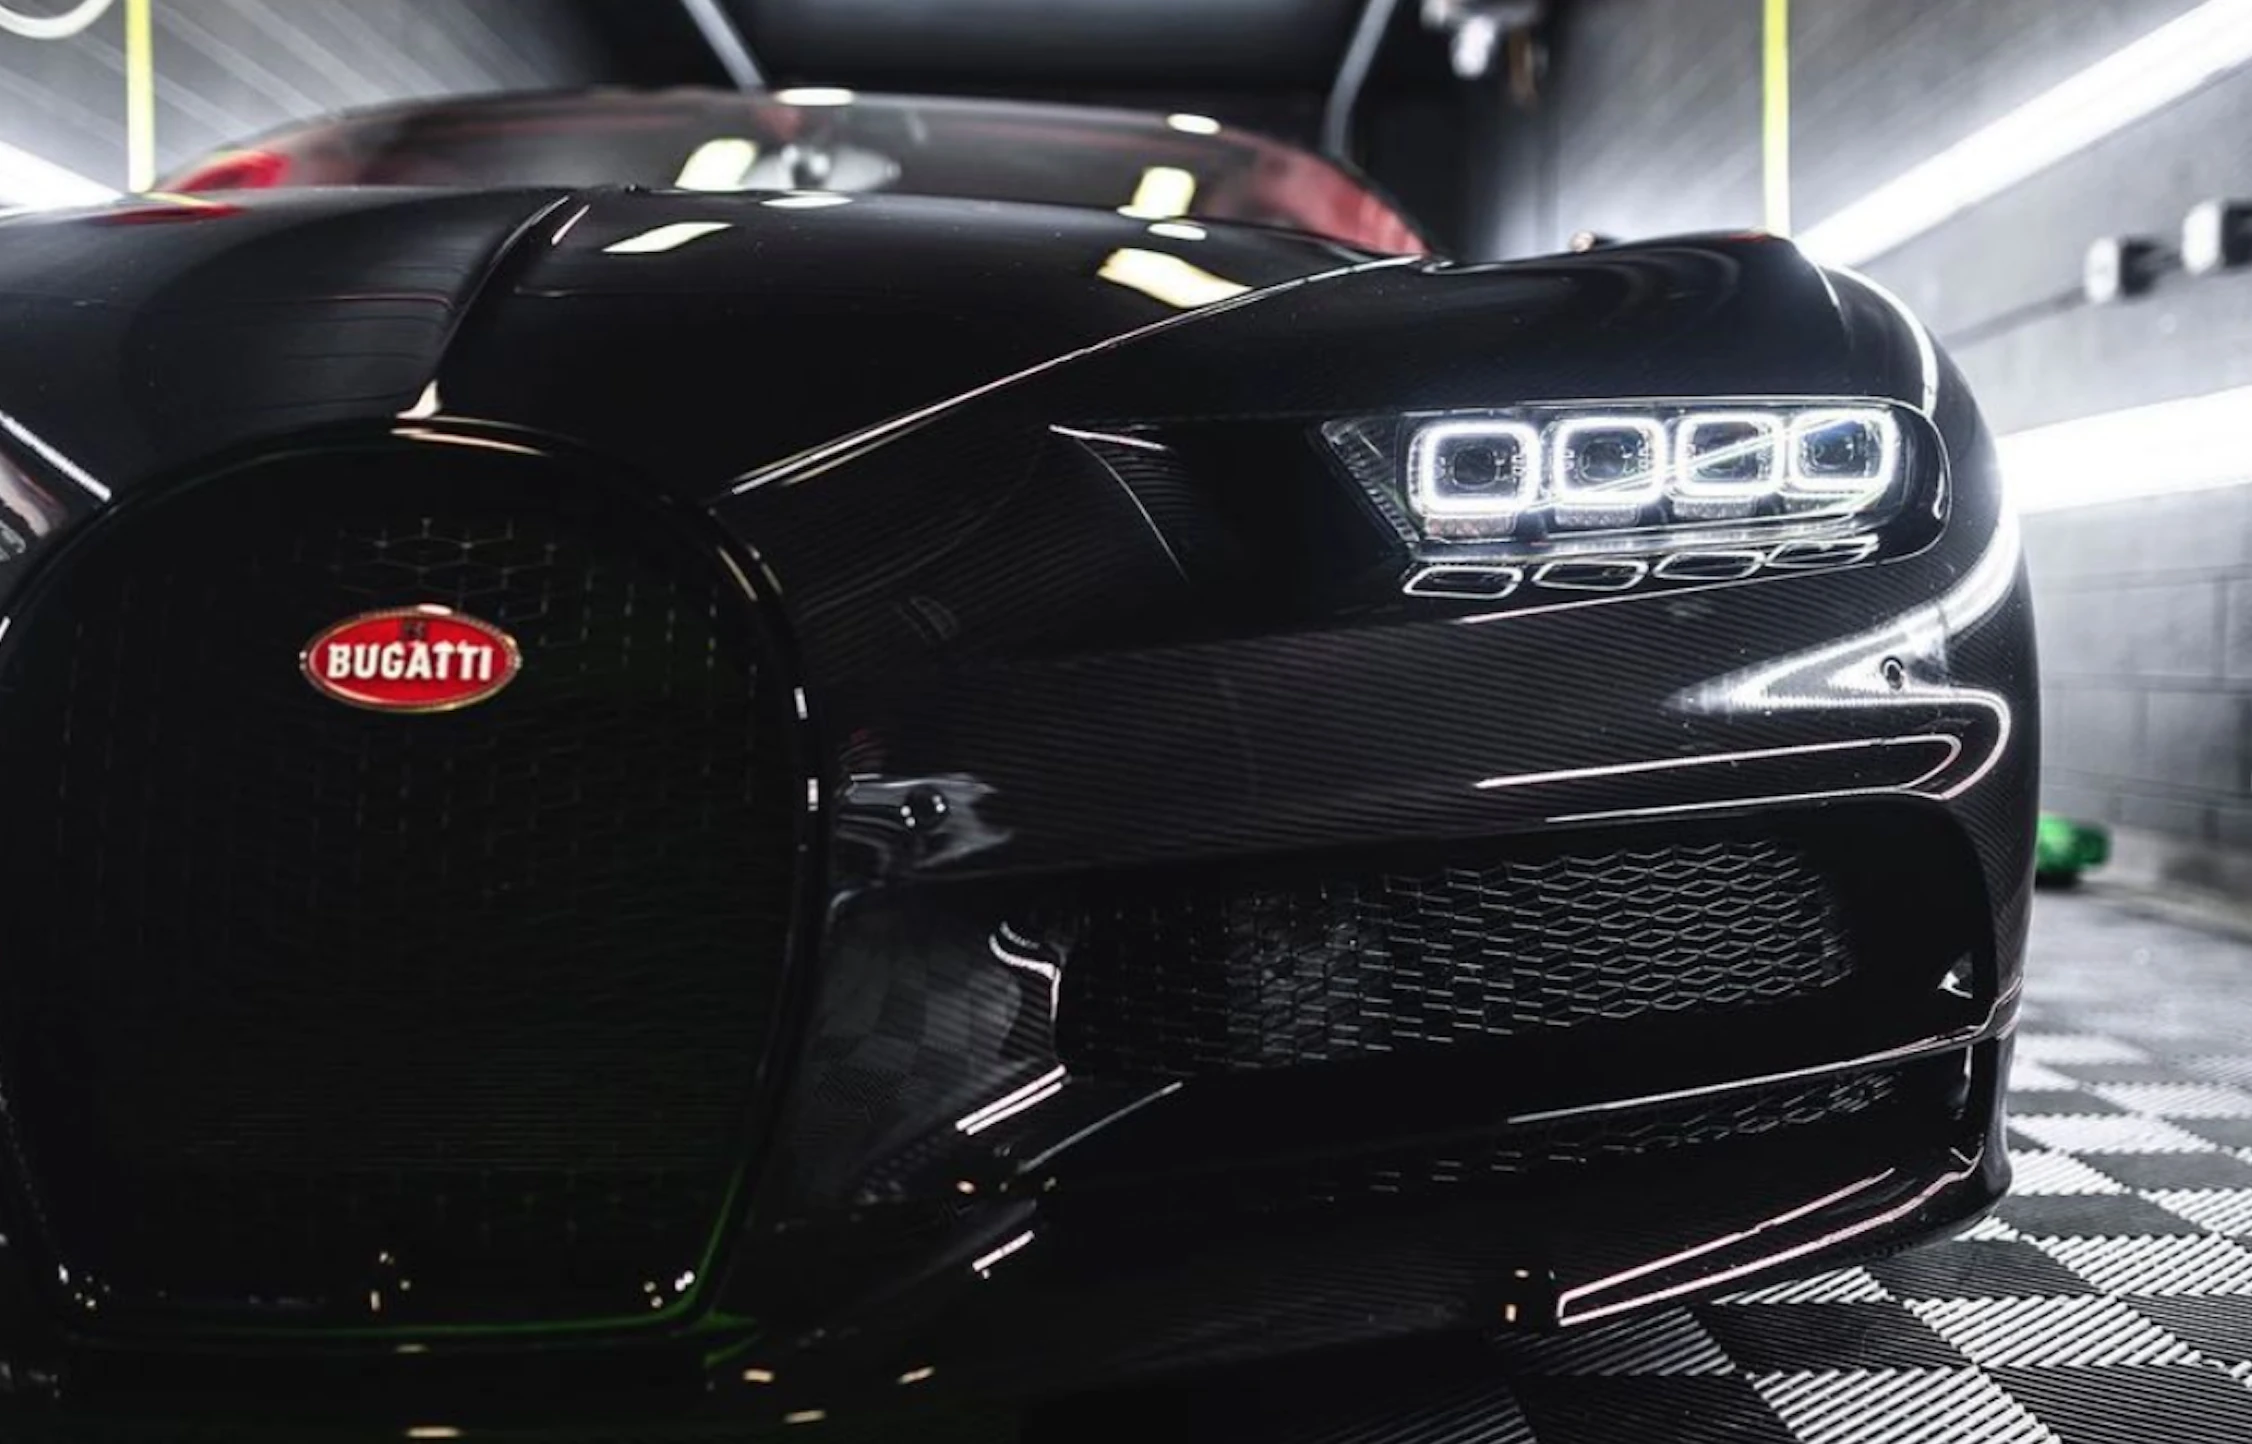 frontal view of a shiny black bugatti